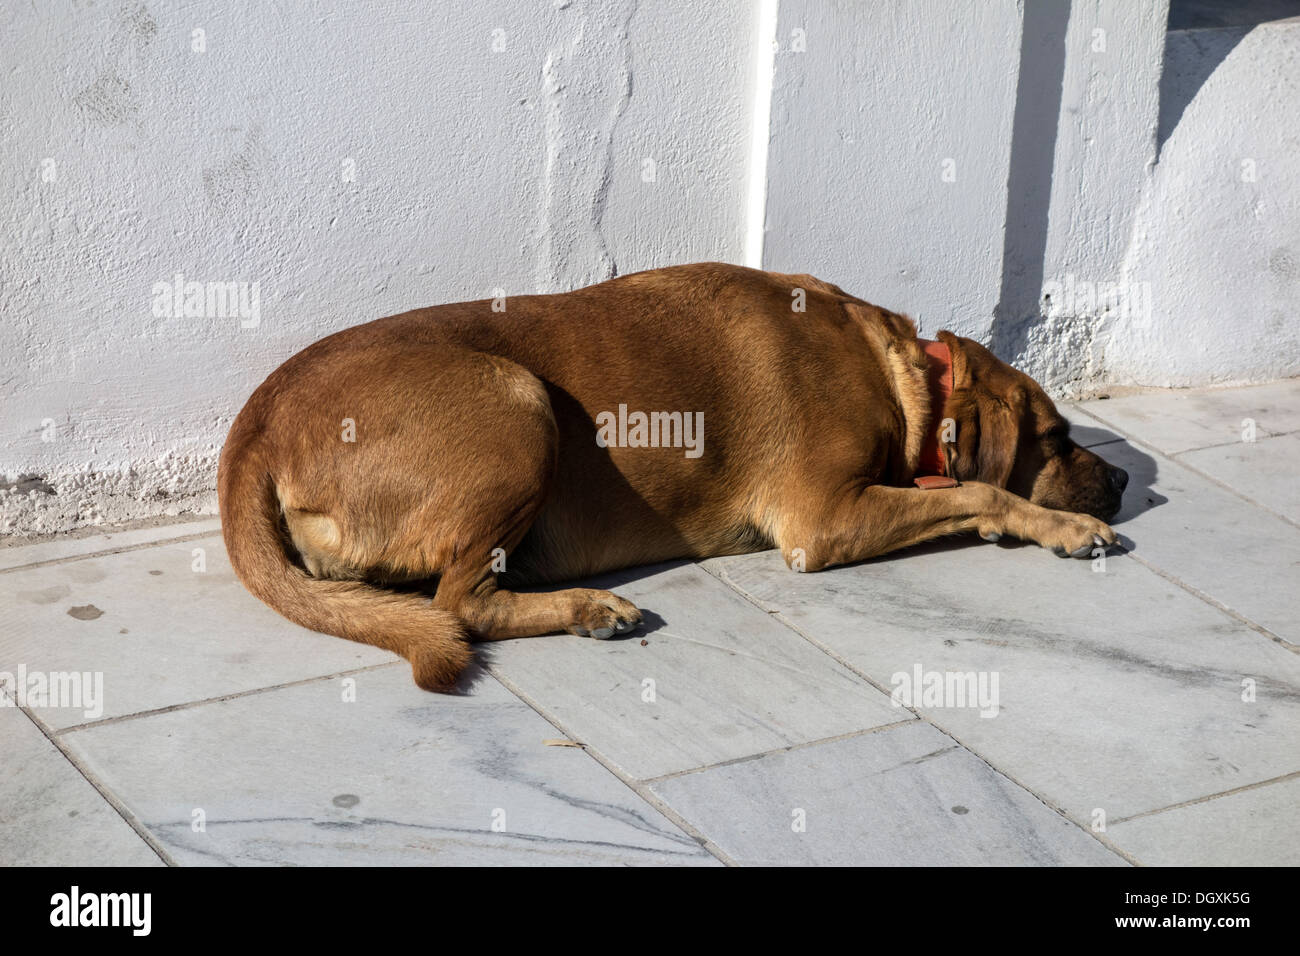 Chien errant dormir dans la rue, Santorin, Grèce Banque D'Images